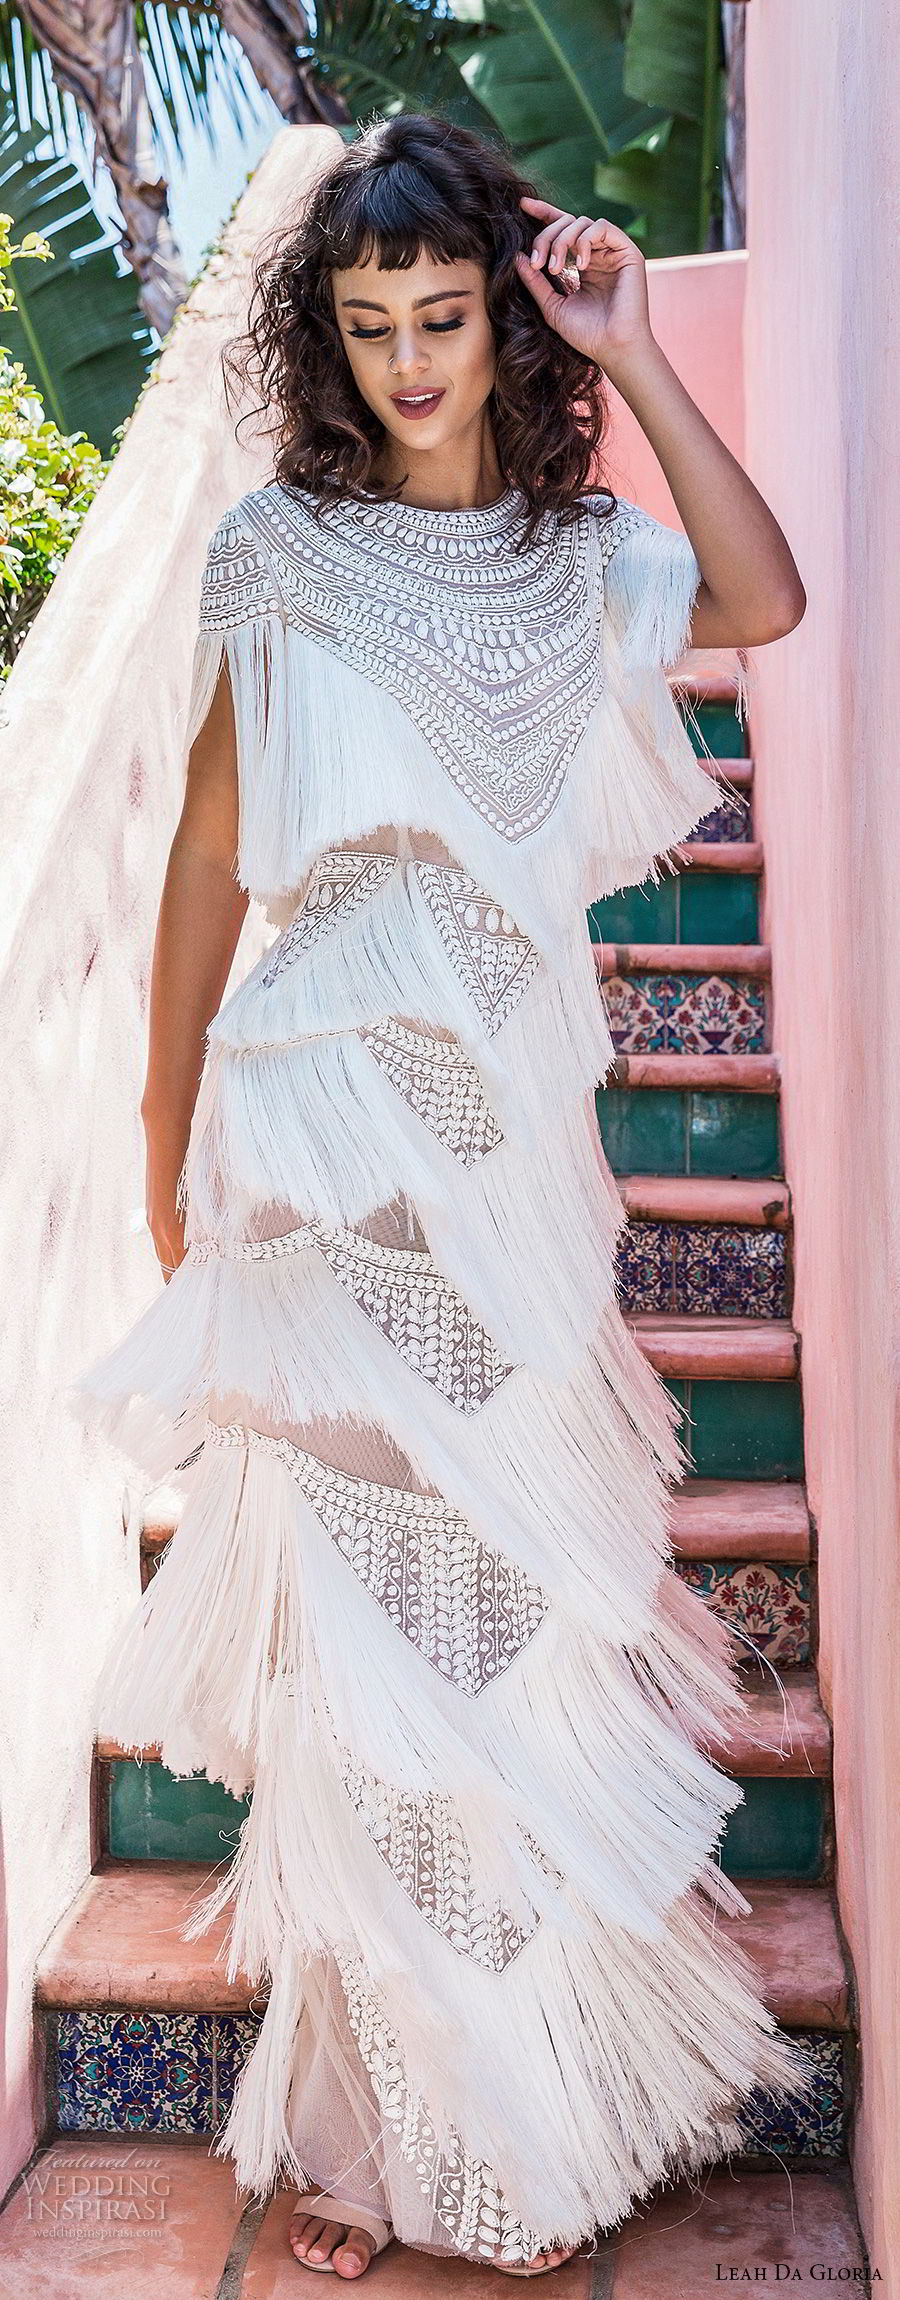 leah da gloria 2017 bridal cap sleeves jewel neckline fully embellishment fringes layered skirt bohemian column wedding dress (mia) mv